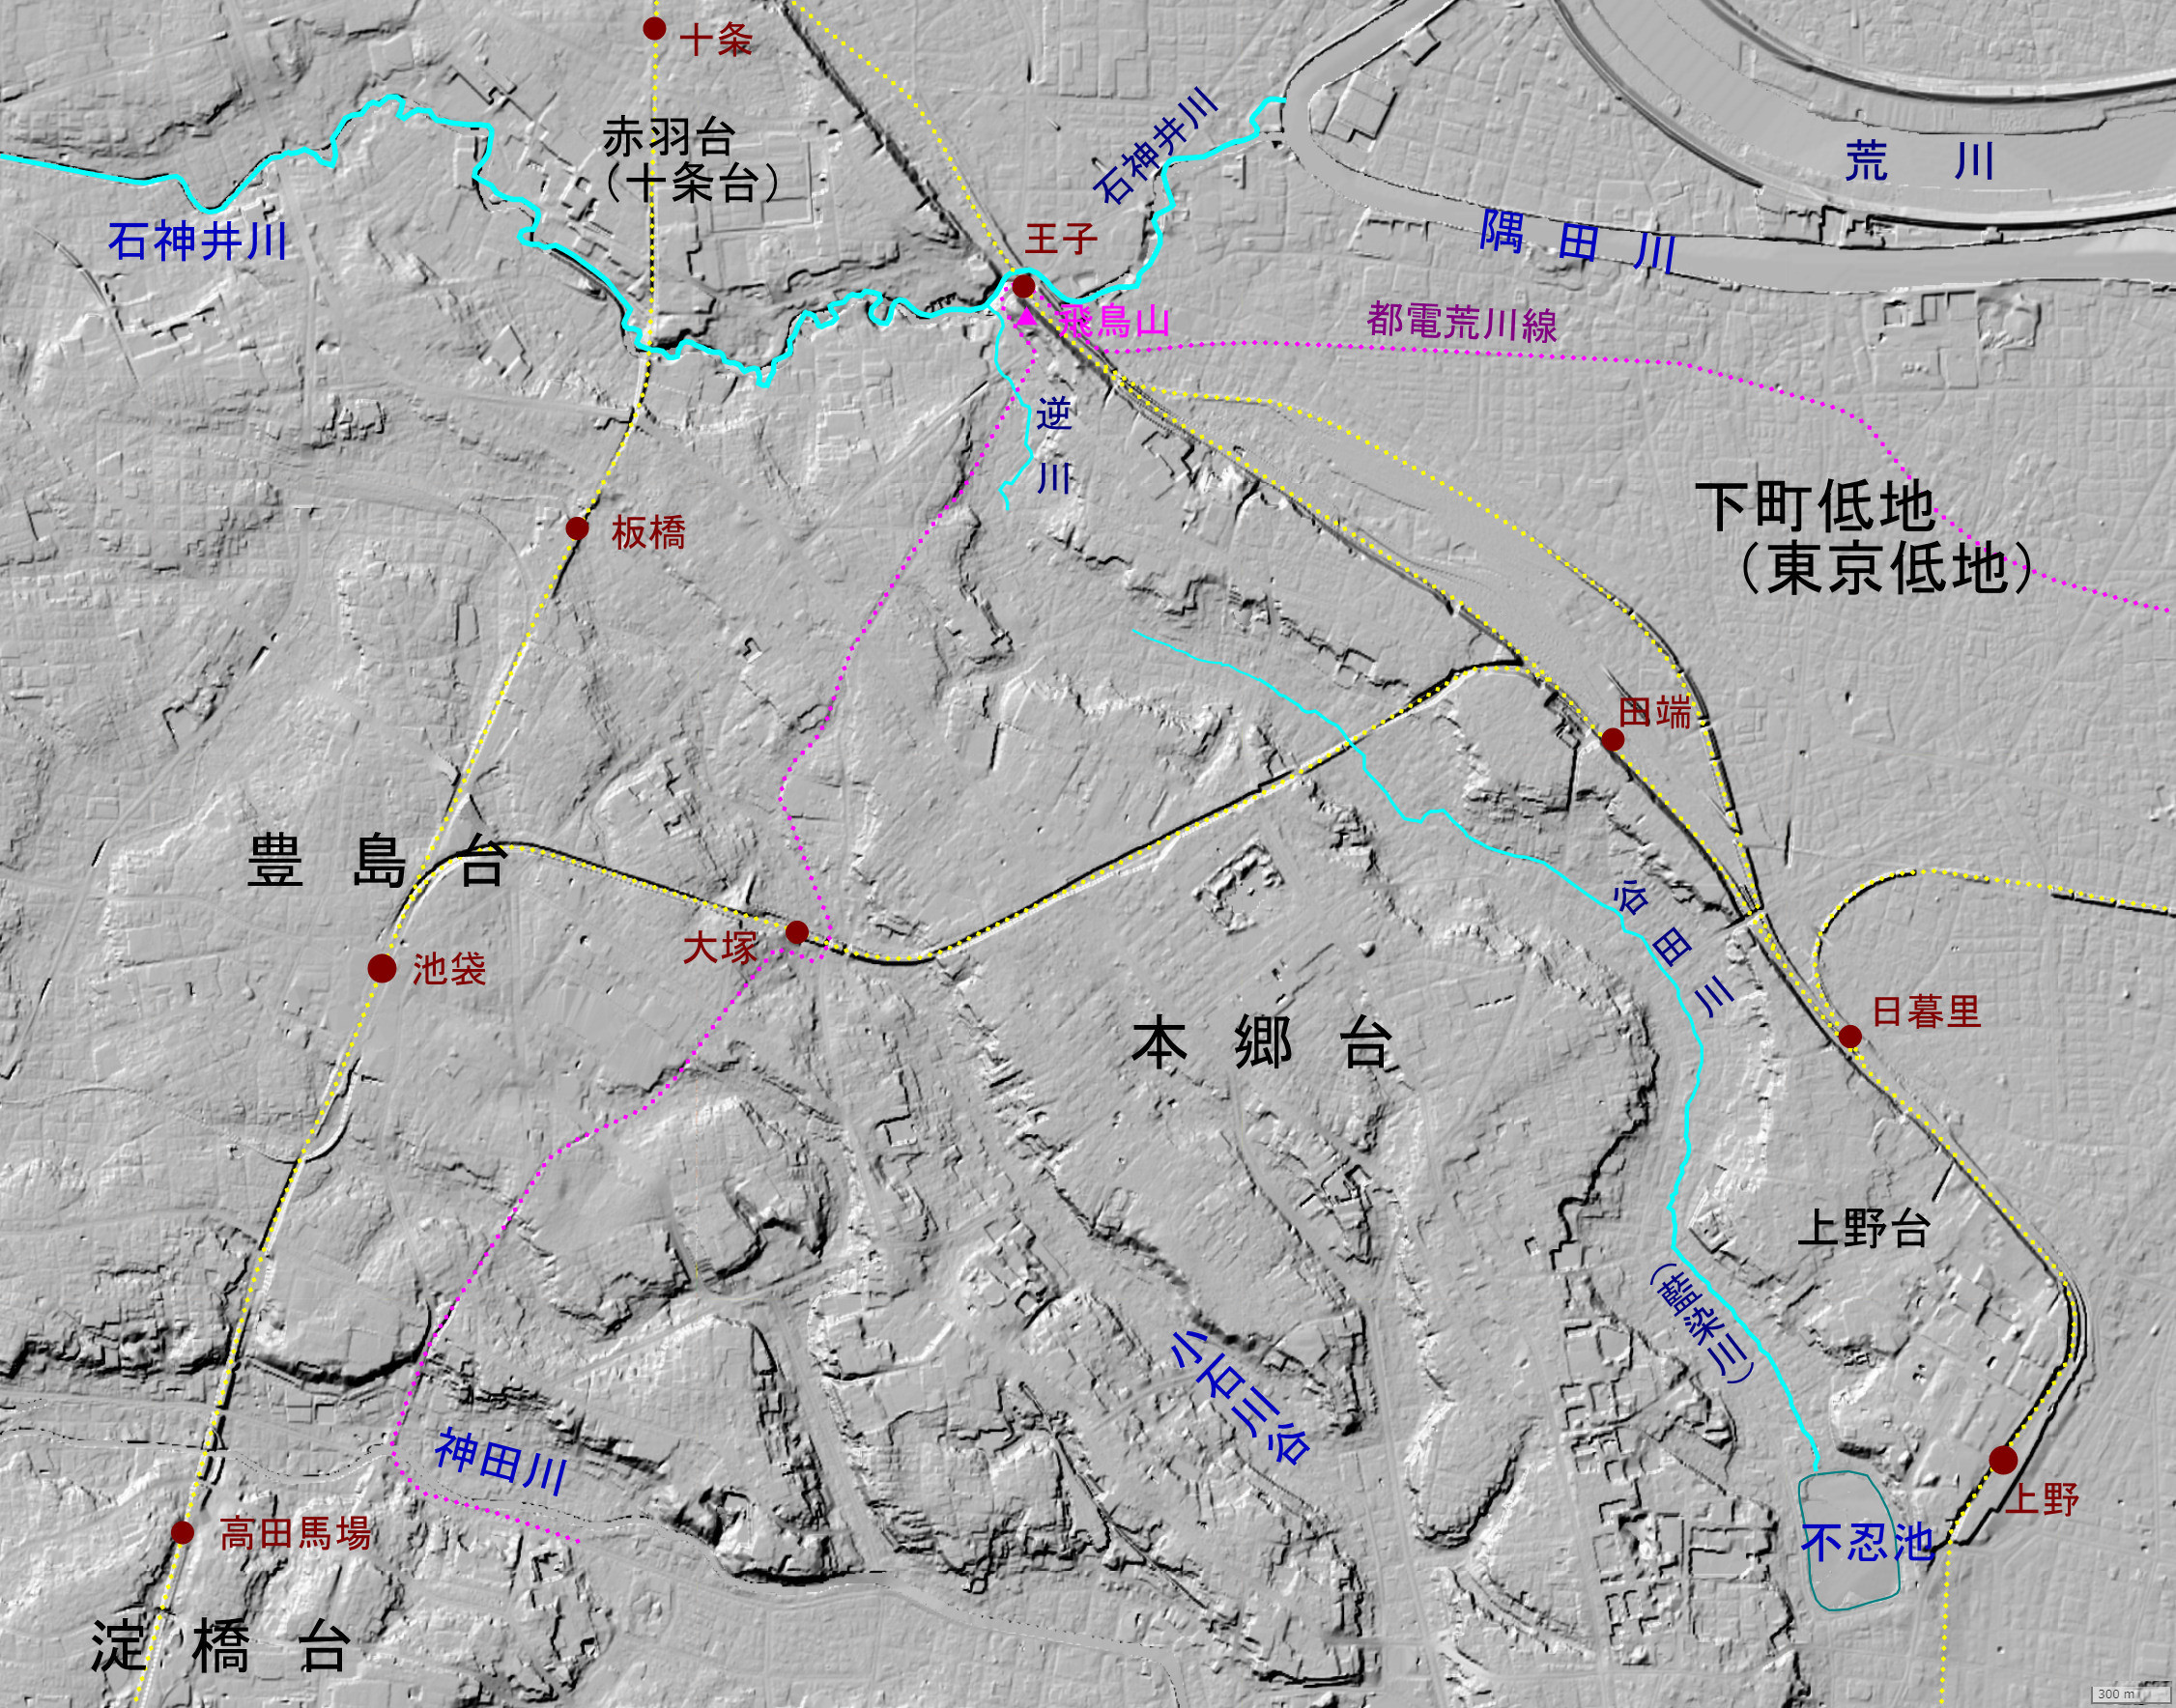 Channel course of the Shakujii River in Meiji period